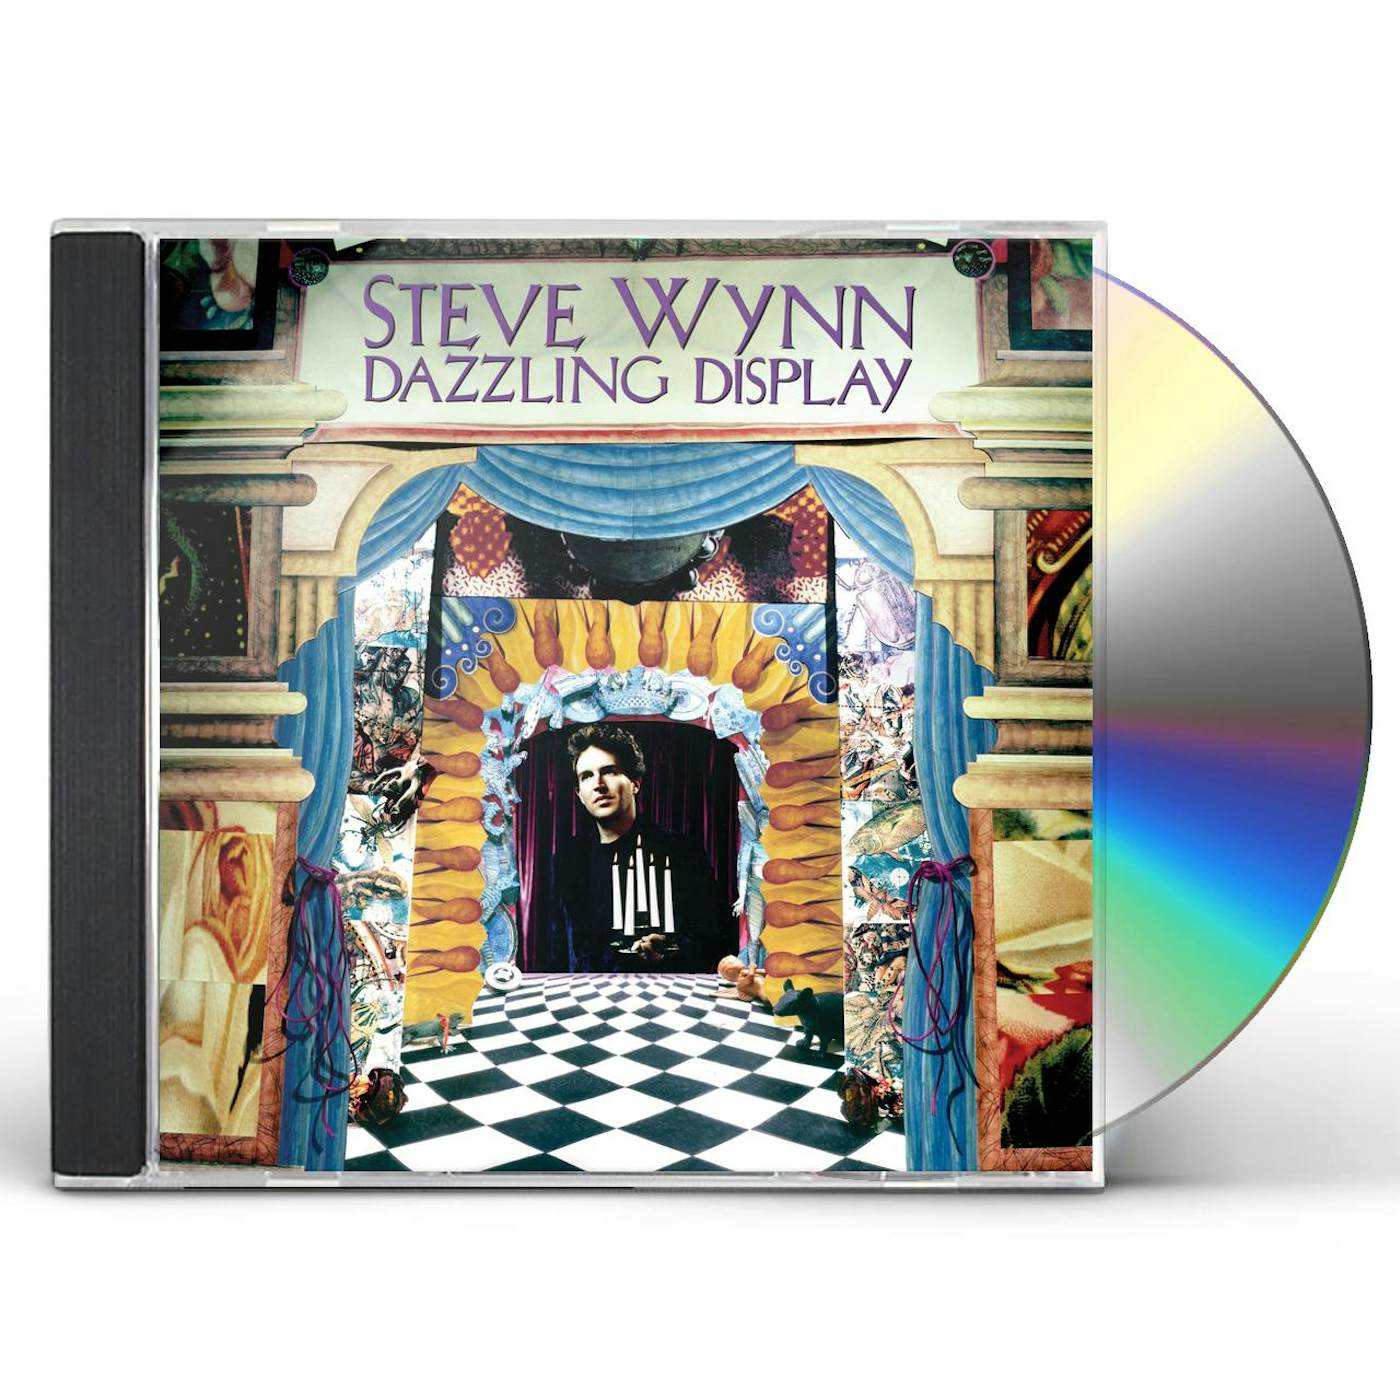 Steve Wynn DAZZLING DISPLAY CD